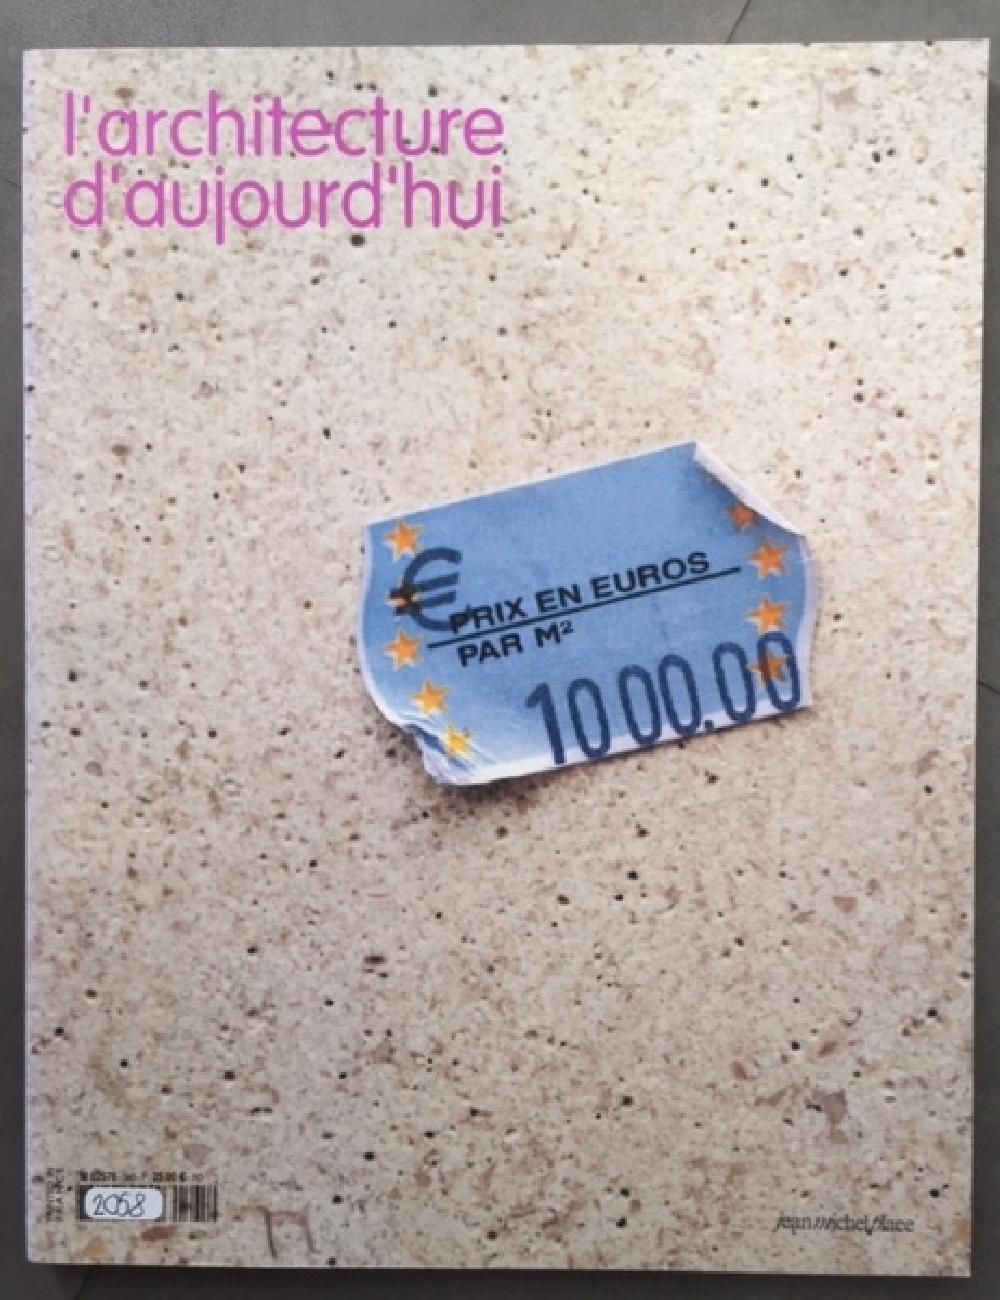 N°345 - 1000 euros par m2